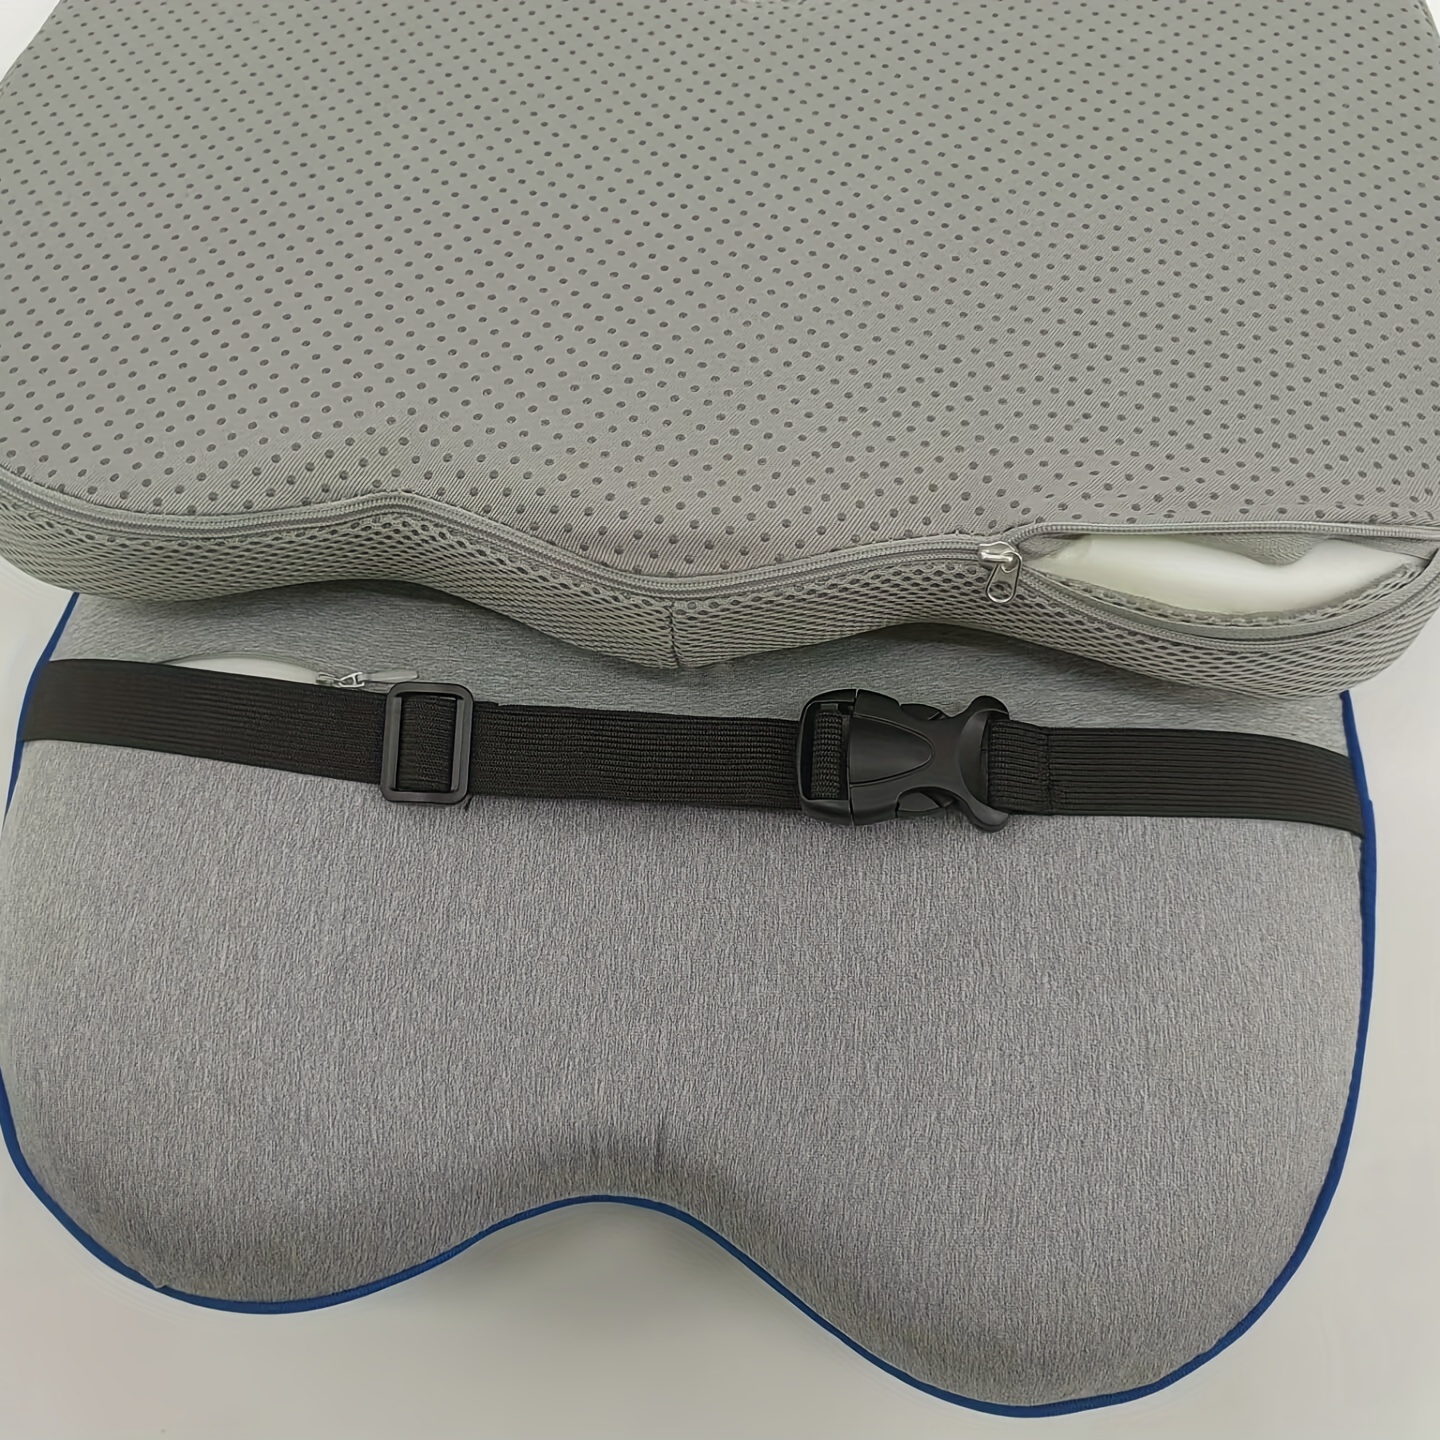 Seat Cushion & Lumbar Support Pillow for Office Chair, Car, Wheelchair  Memory Foam Chair Cushion for Sciatica, Lower Back & Tailbone Pain Relief  Desk Pad 